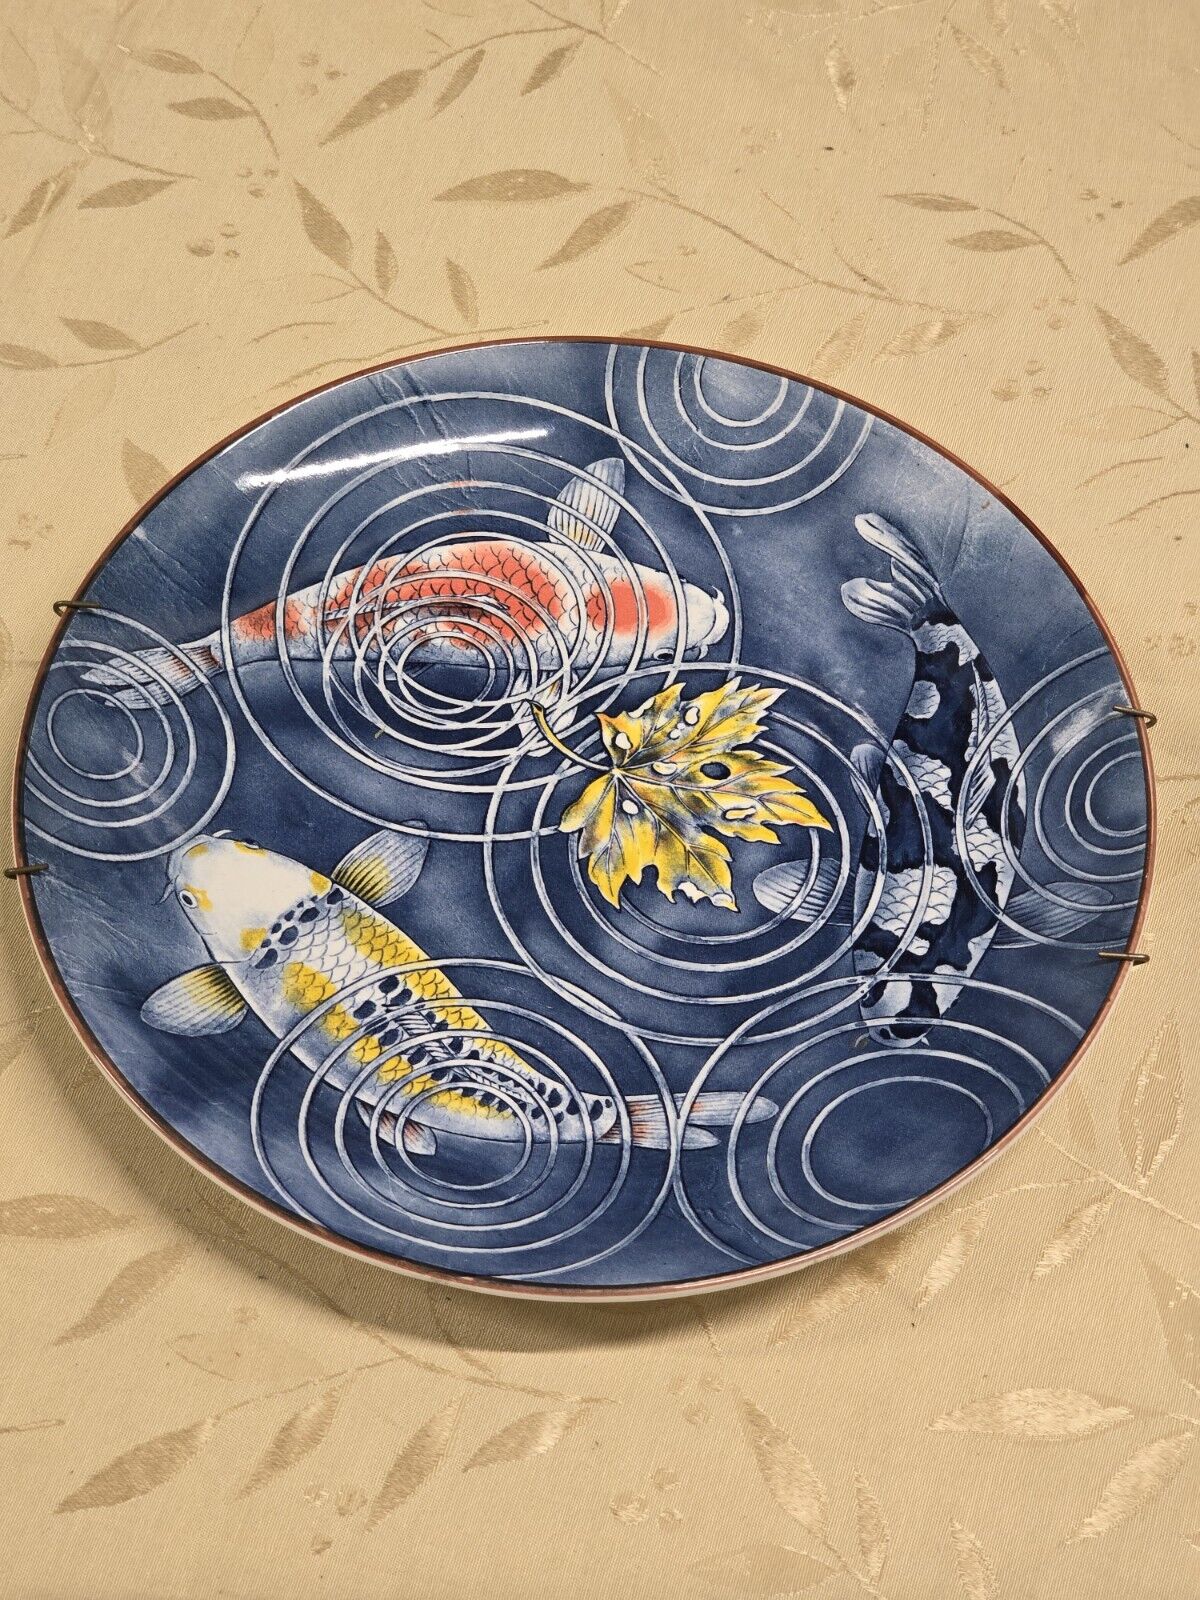 Vintage Japanese Porcelain Koi Fish Charger Plate Deep Blue w/orange, yellow Koi